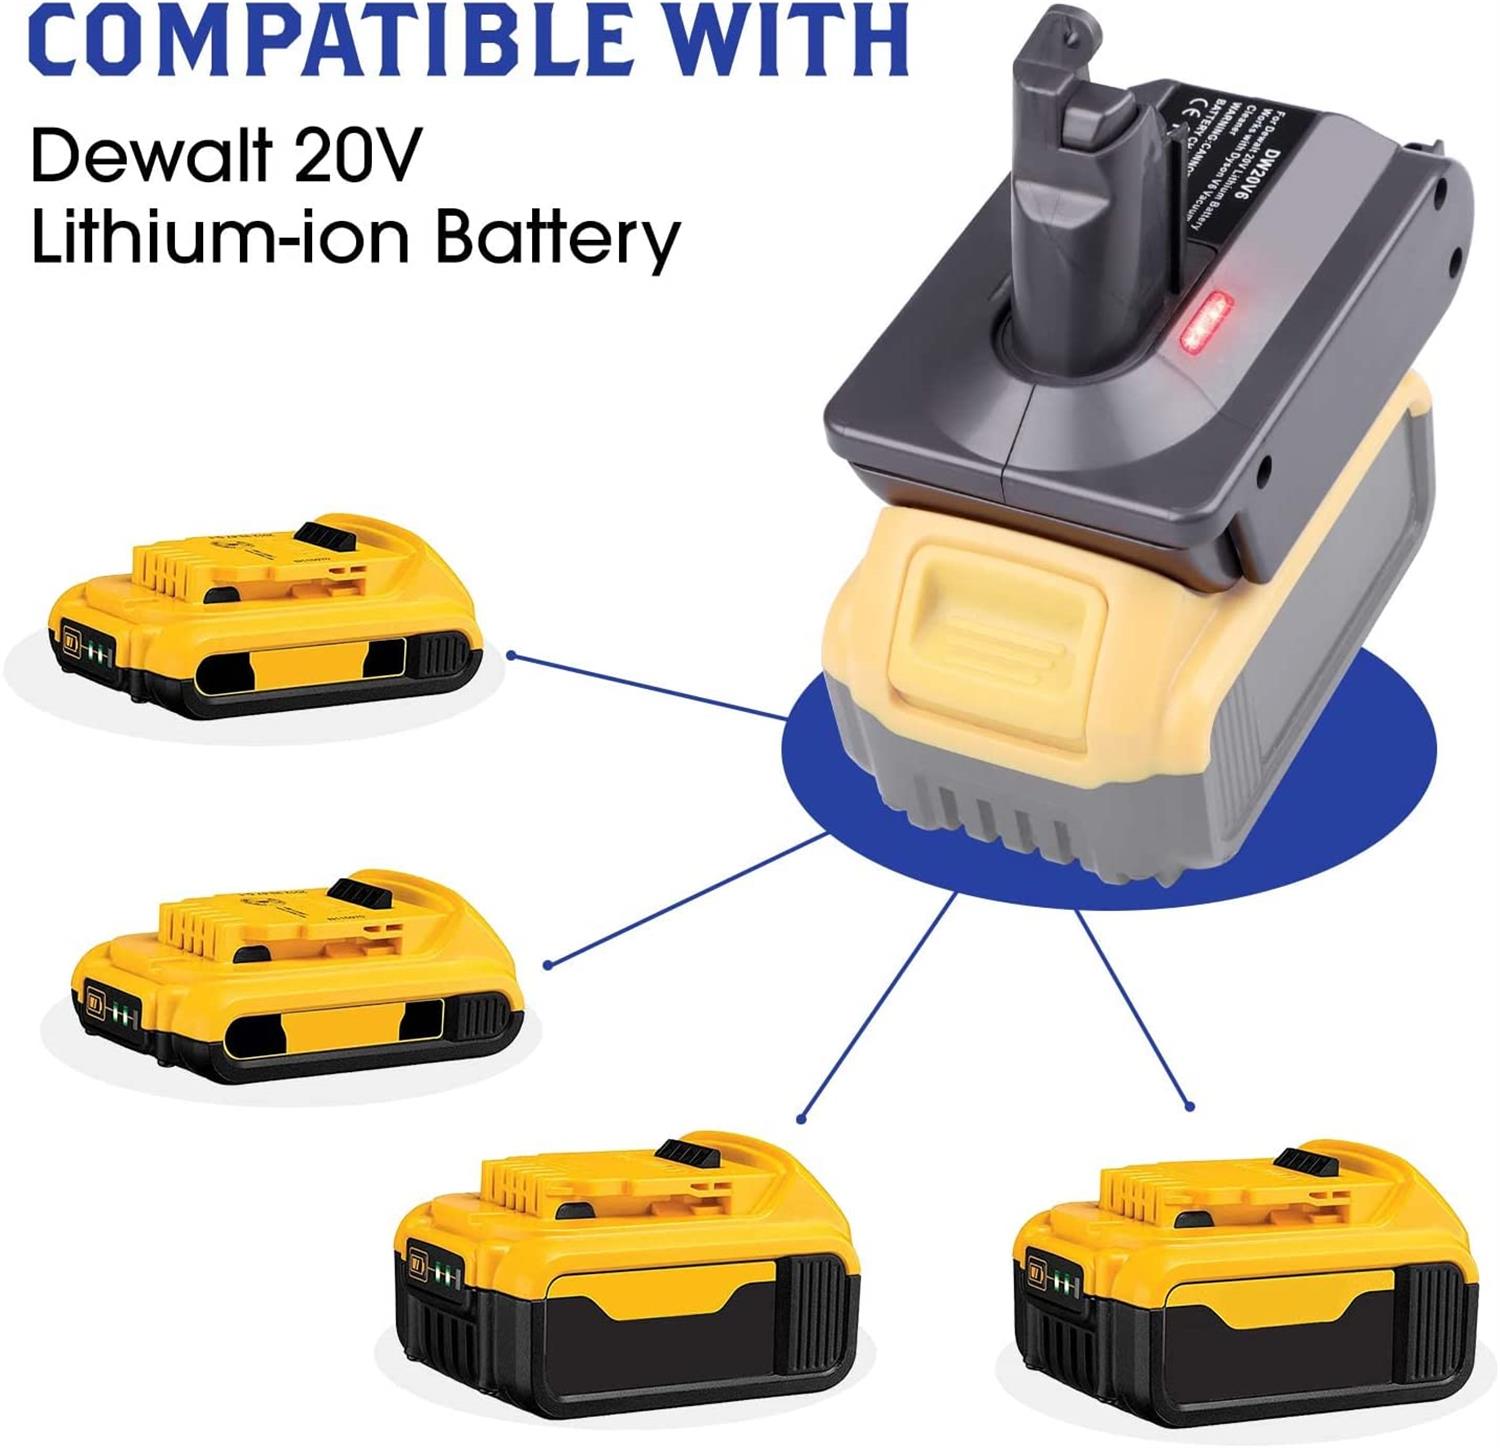 Battery Adapter Compatible Makita 18v To Compatible Dyson V6/v7/v8 Vacuum  Cleaner